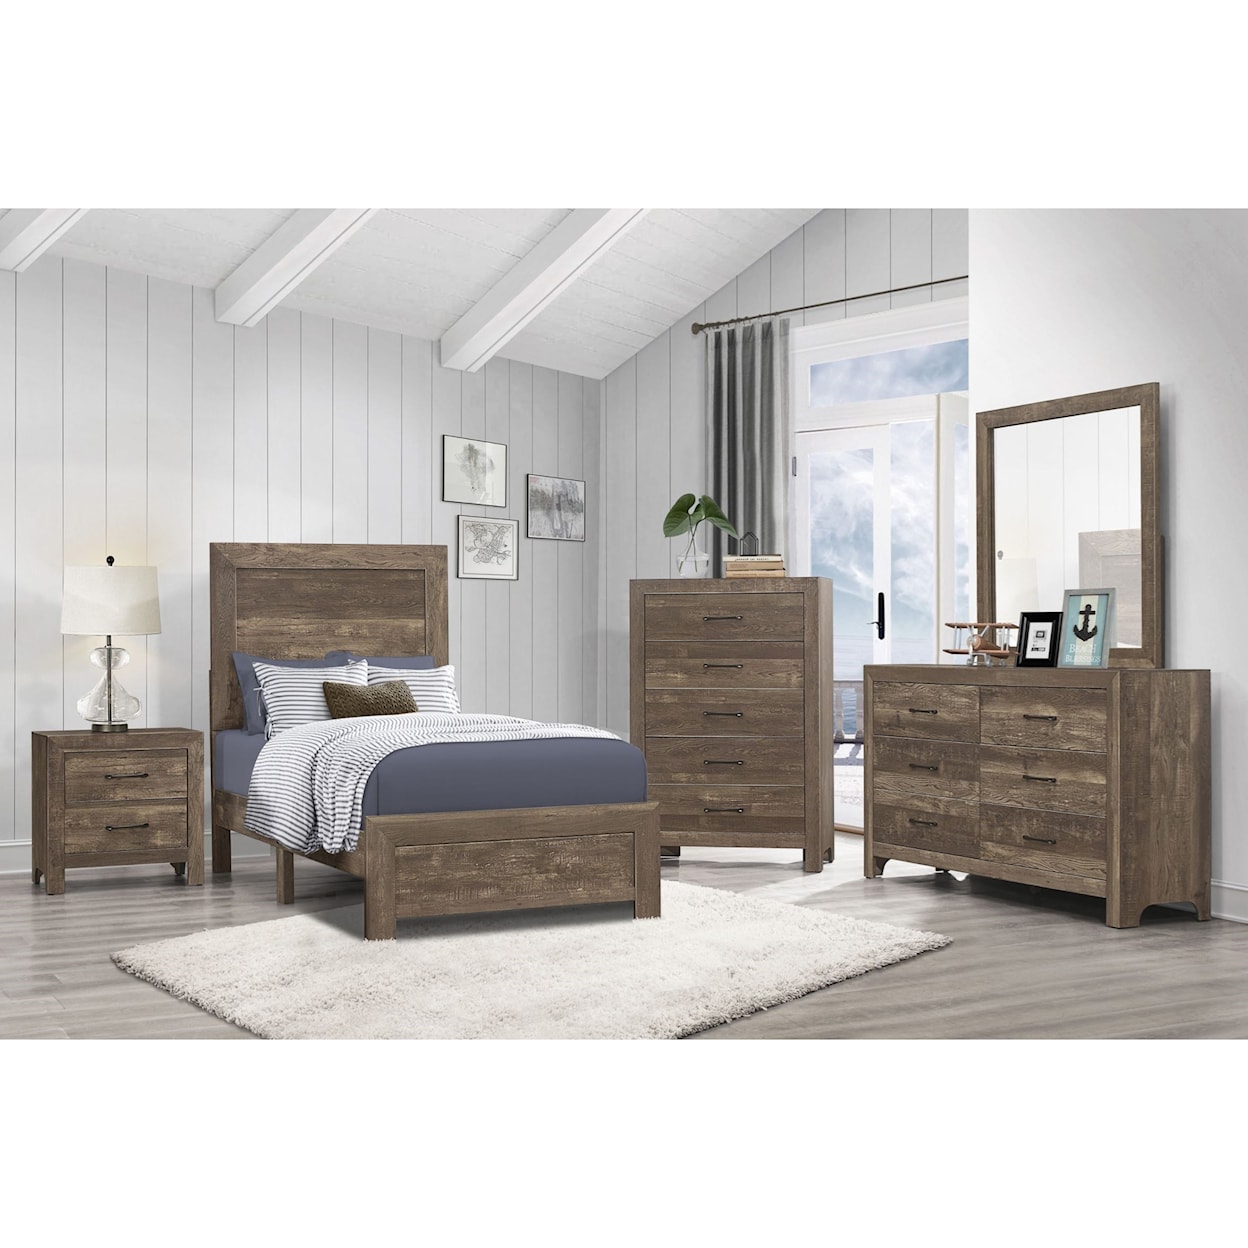 Homelegance Furniture Corbin Twin Bedroom Group